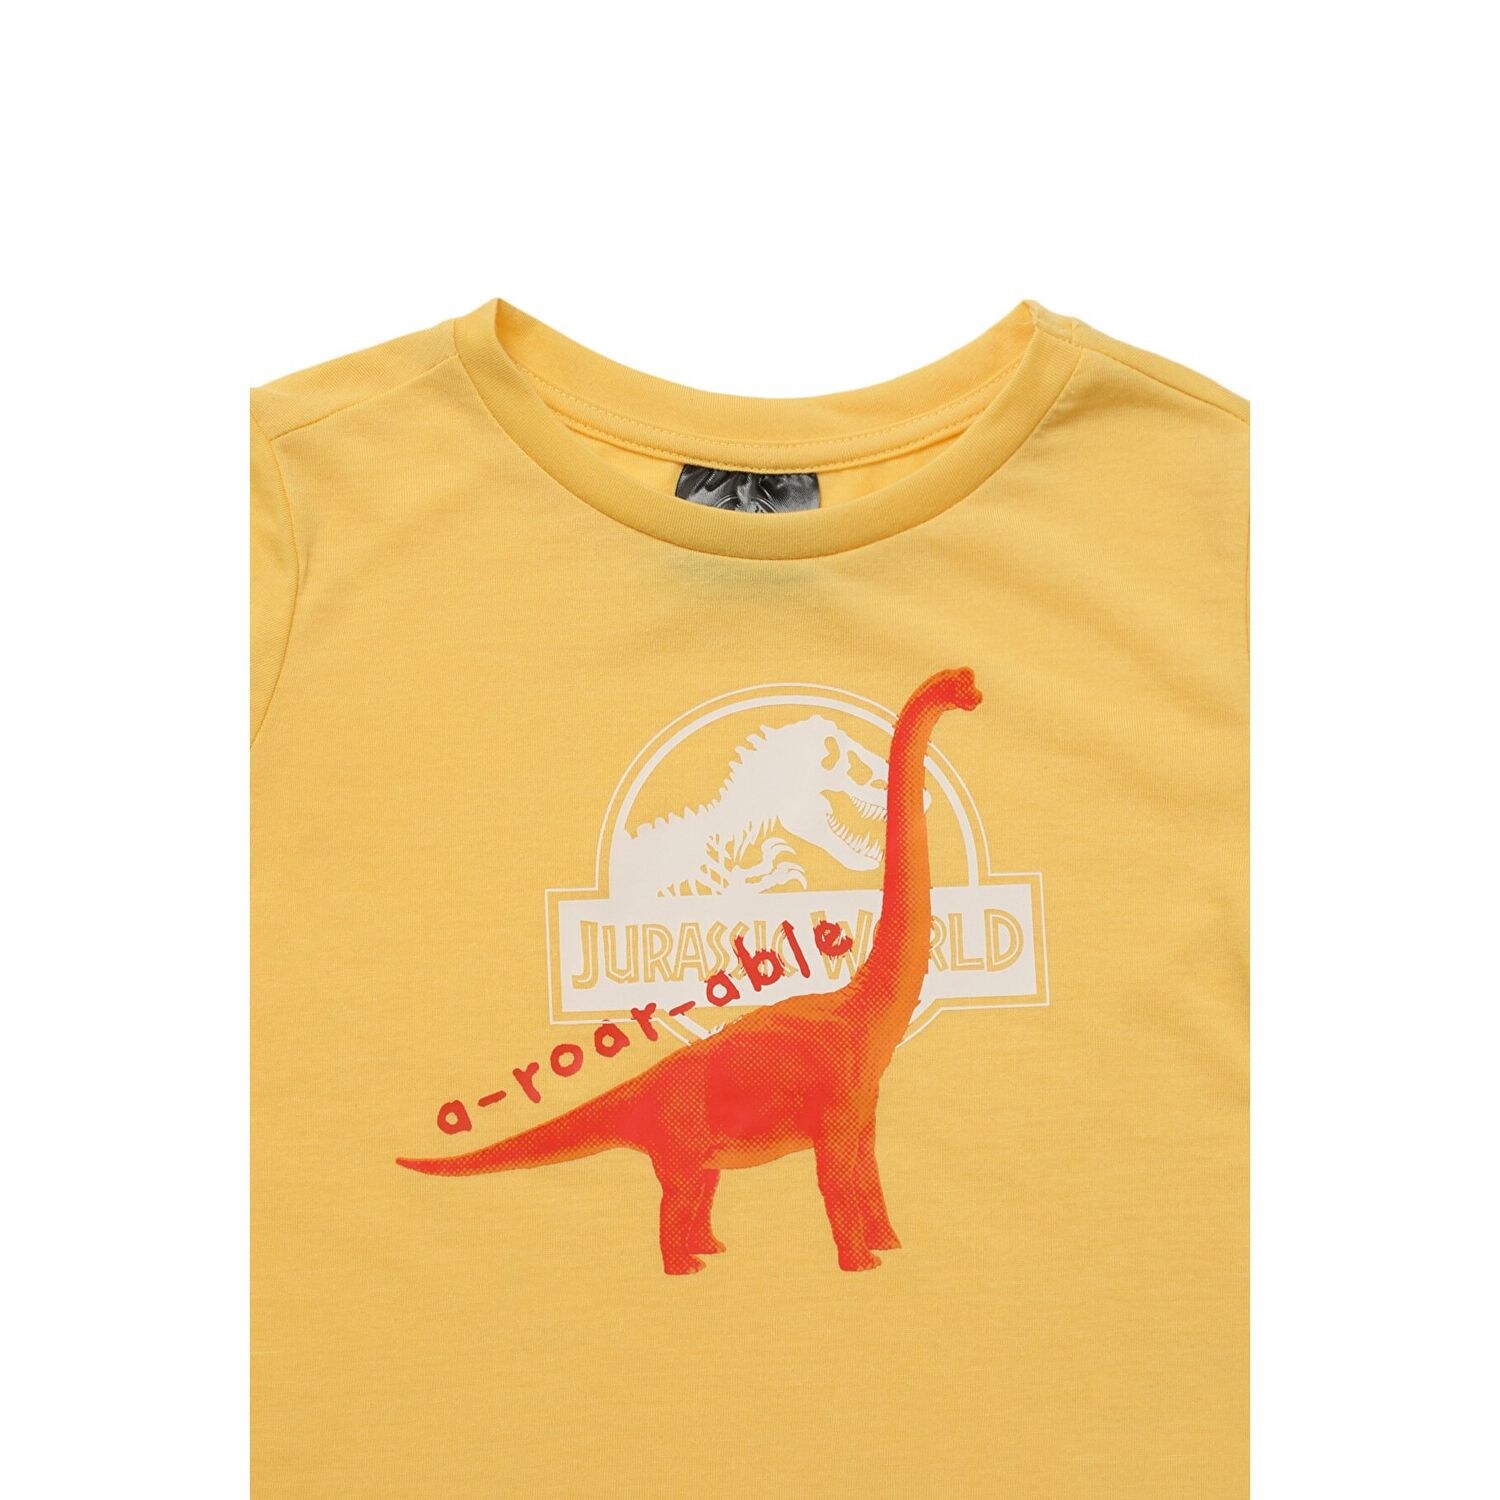 Trendyol Yellow Jurrasic World Printed Boy Knitted T-Shirt